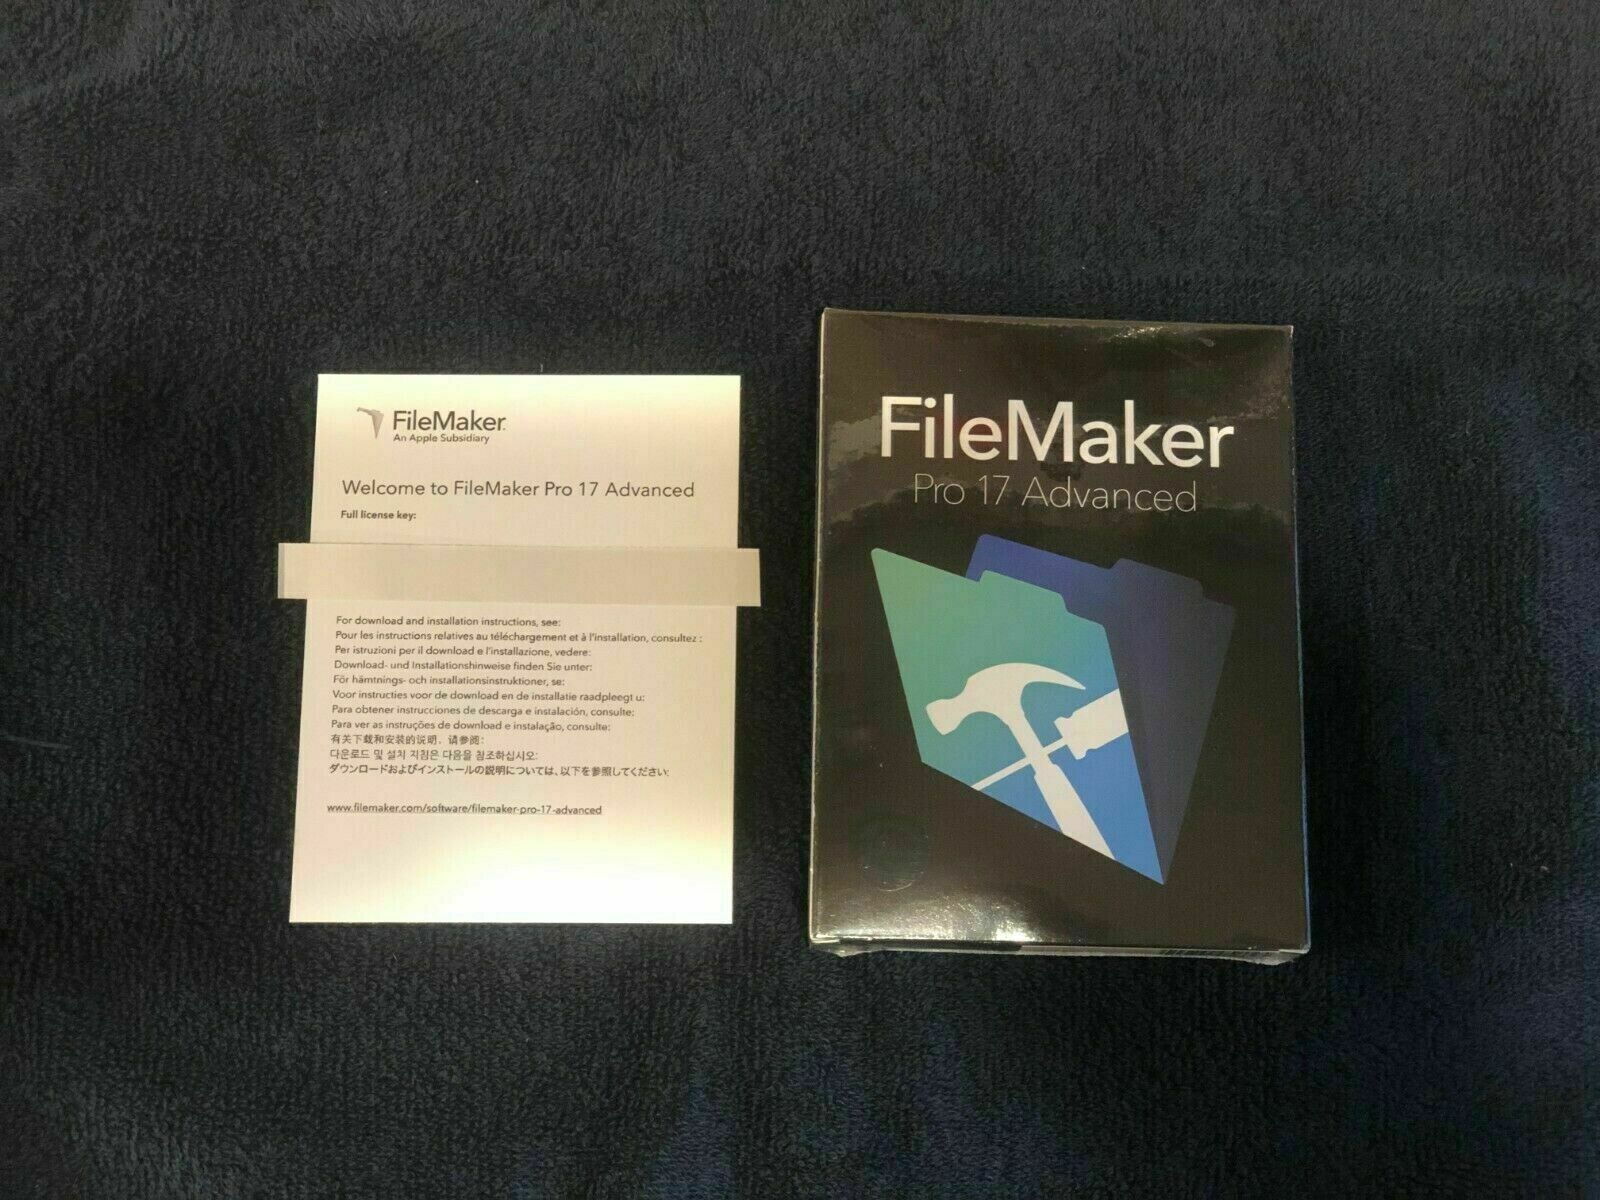 FileMaker Pro 17 Advanced Software - Full Version For Mac/Windows, 